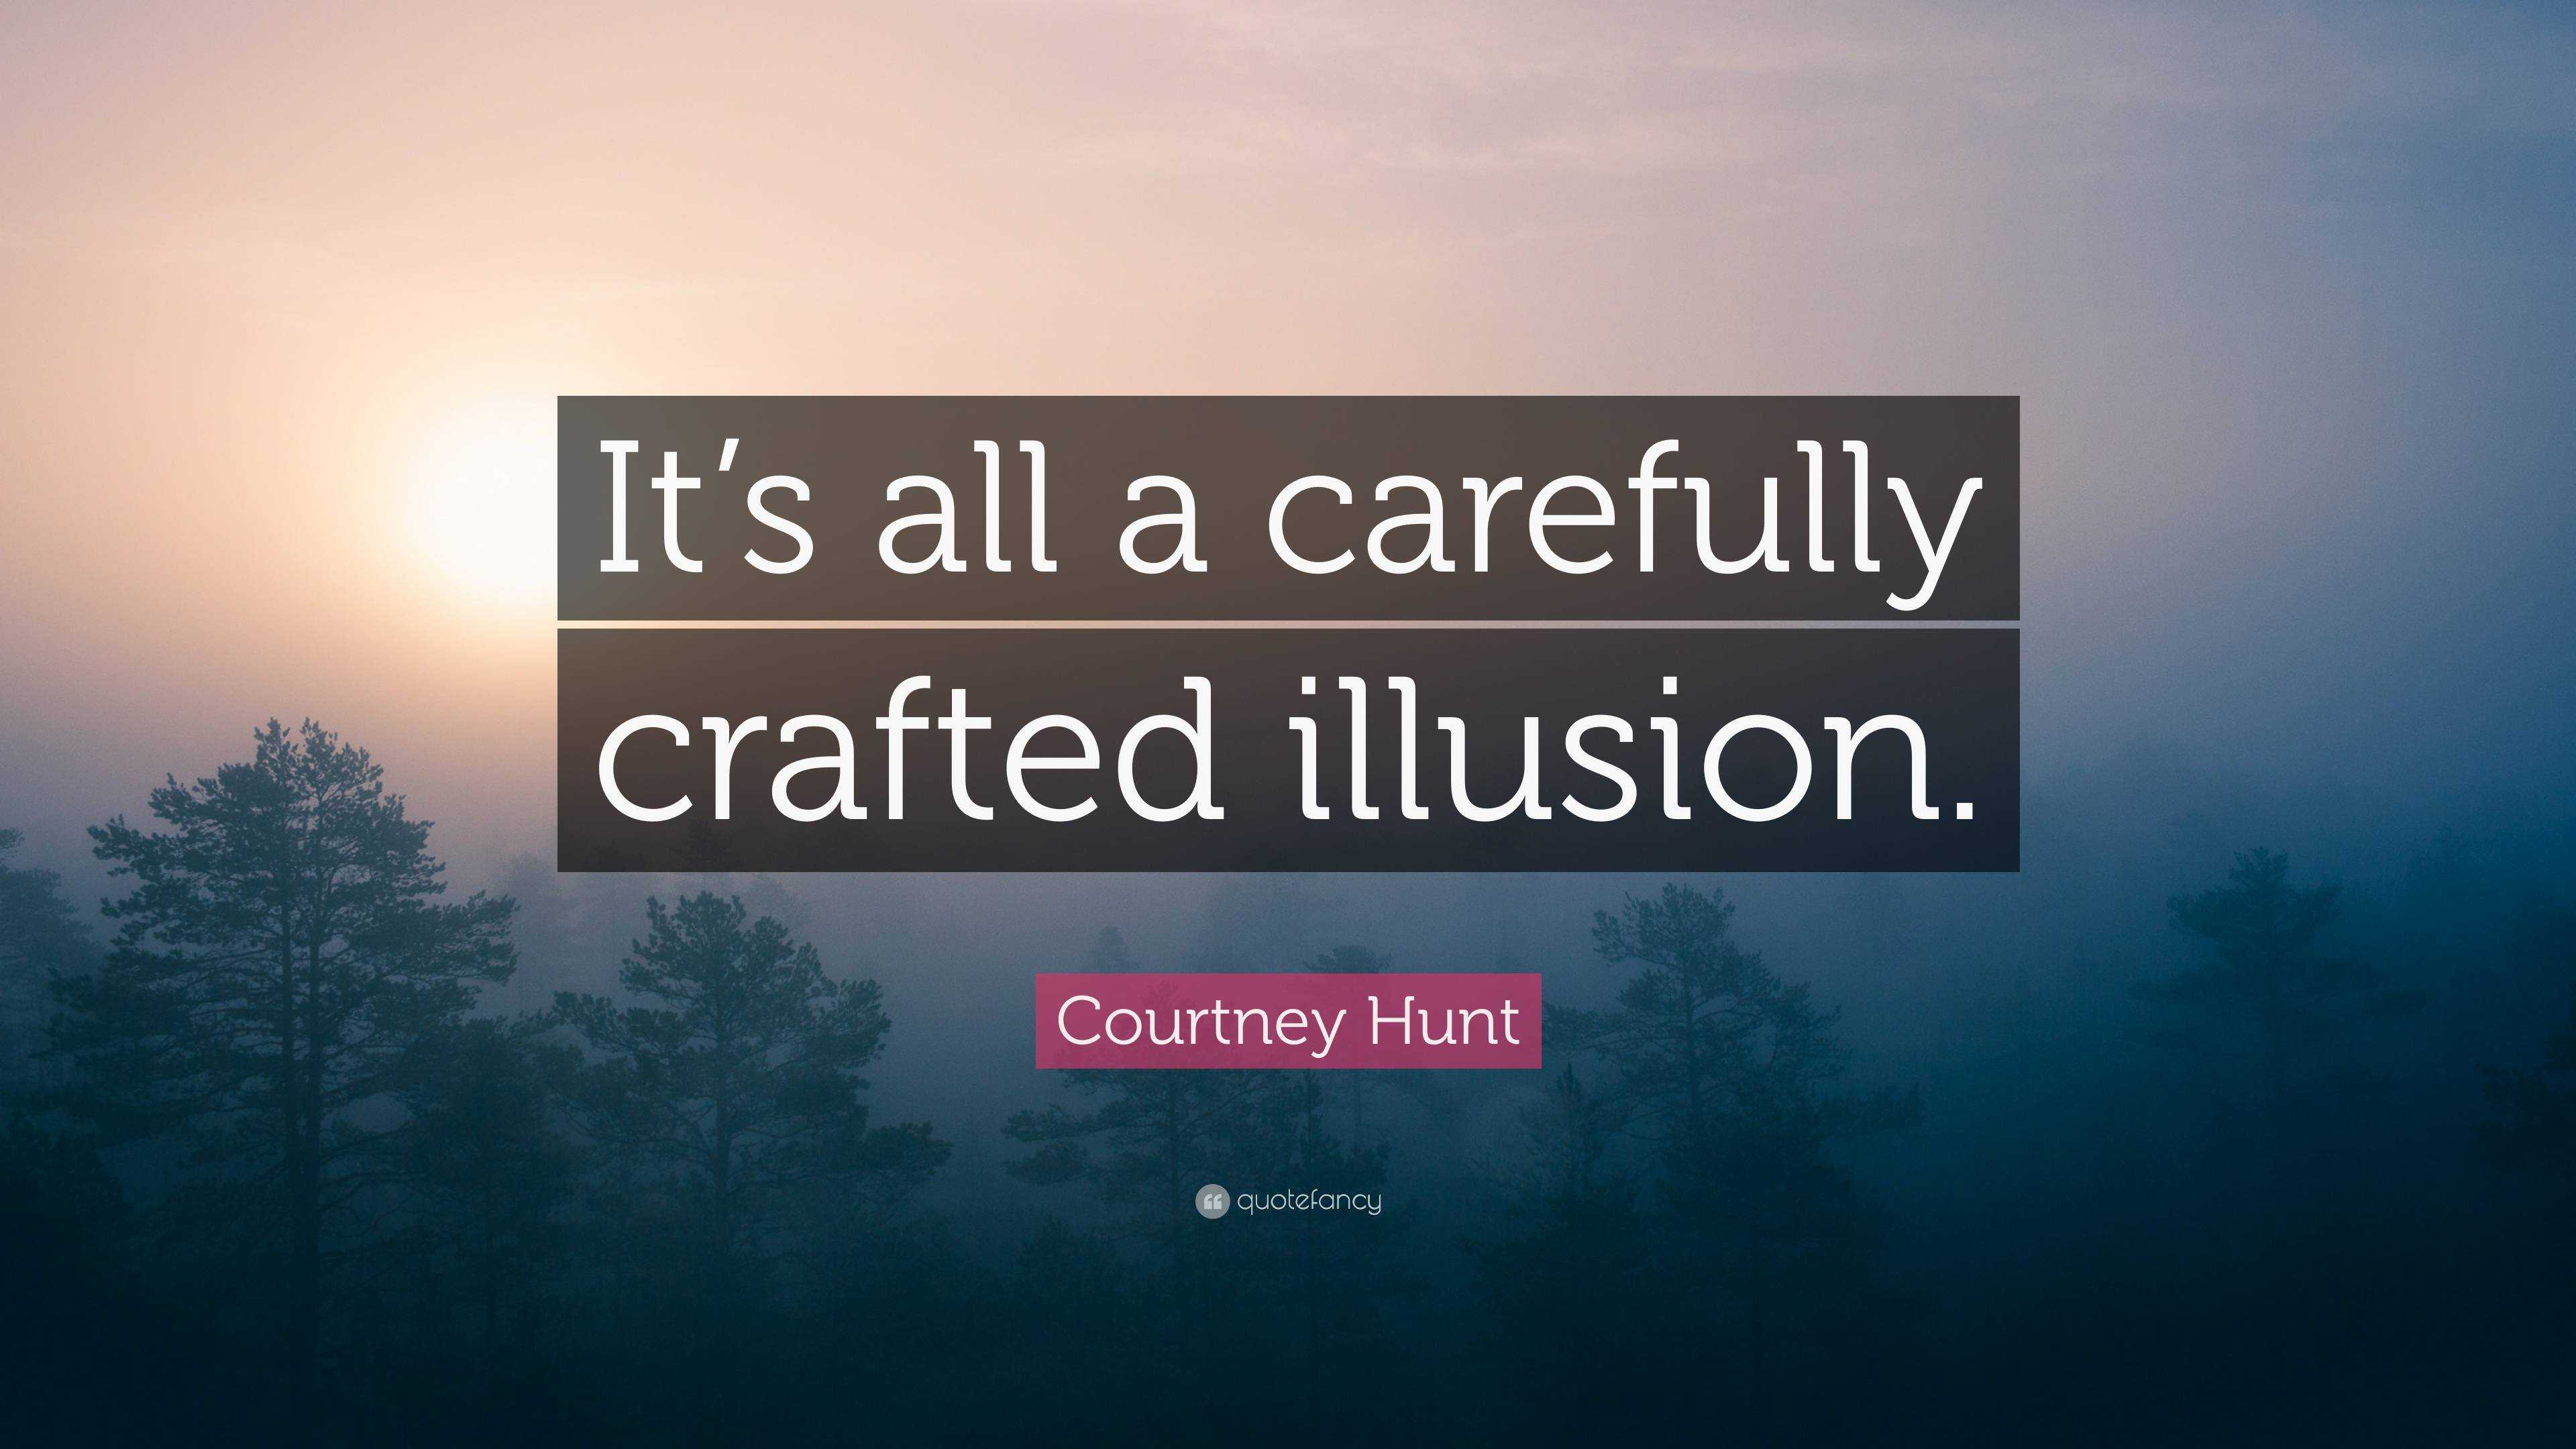 Top 2 Courtney Hunt Quotes 22 Update Quotefancy